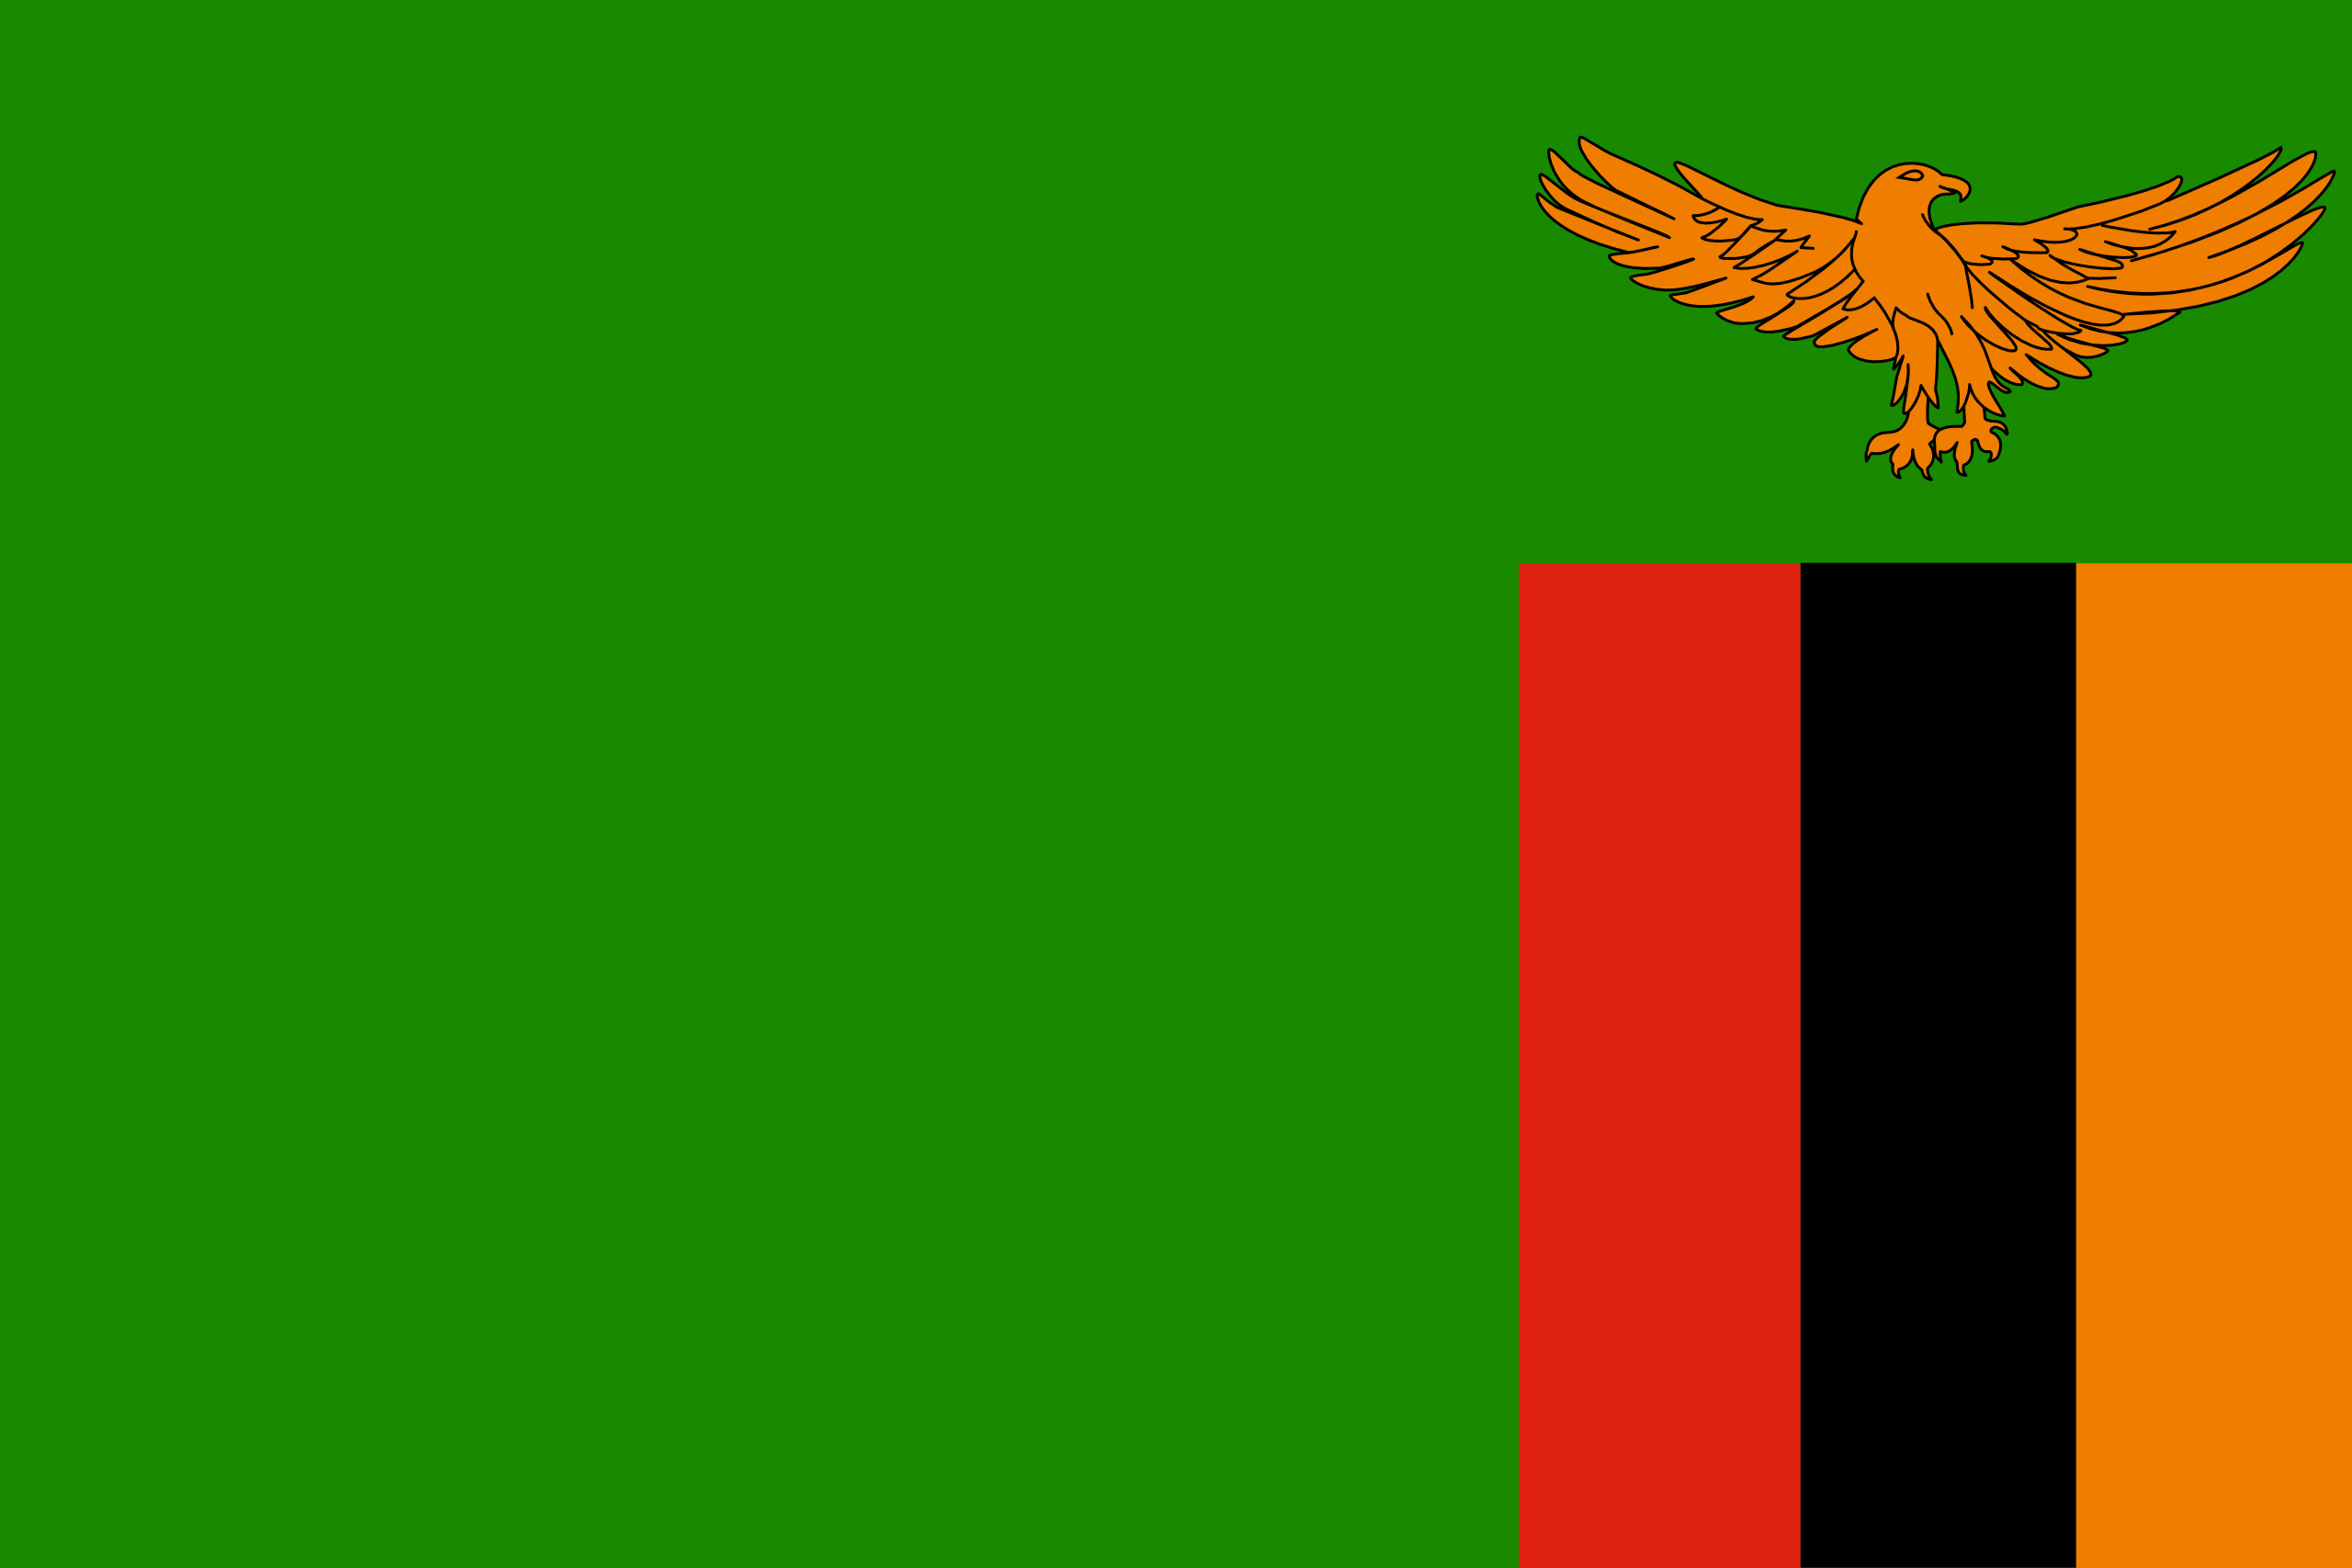 Zambia's flag